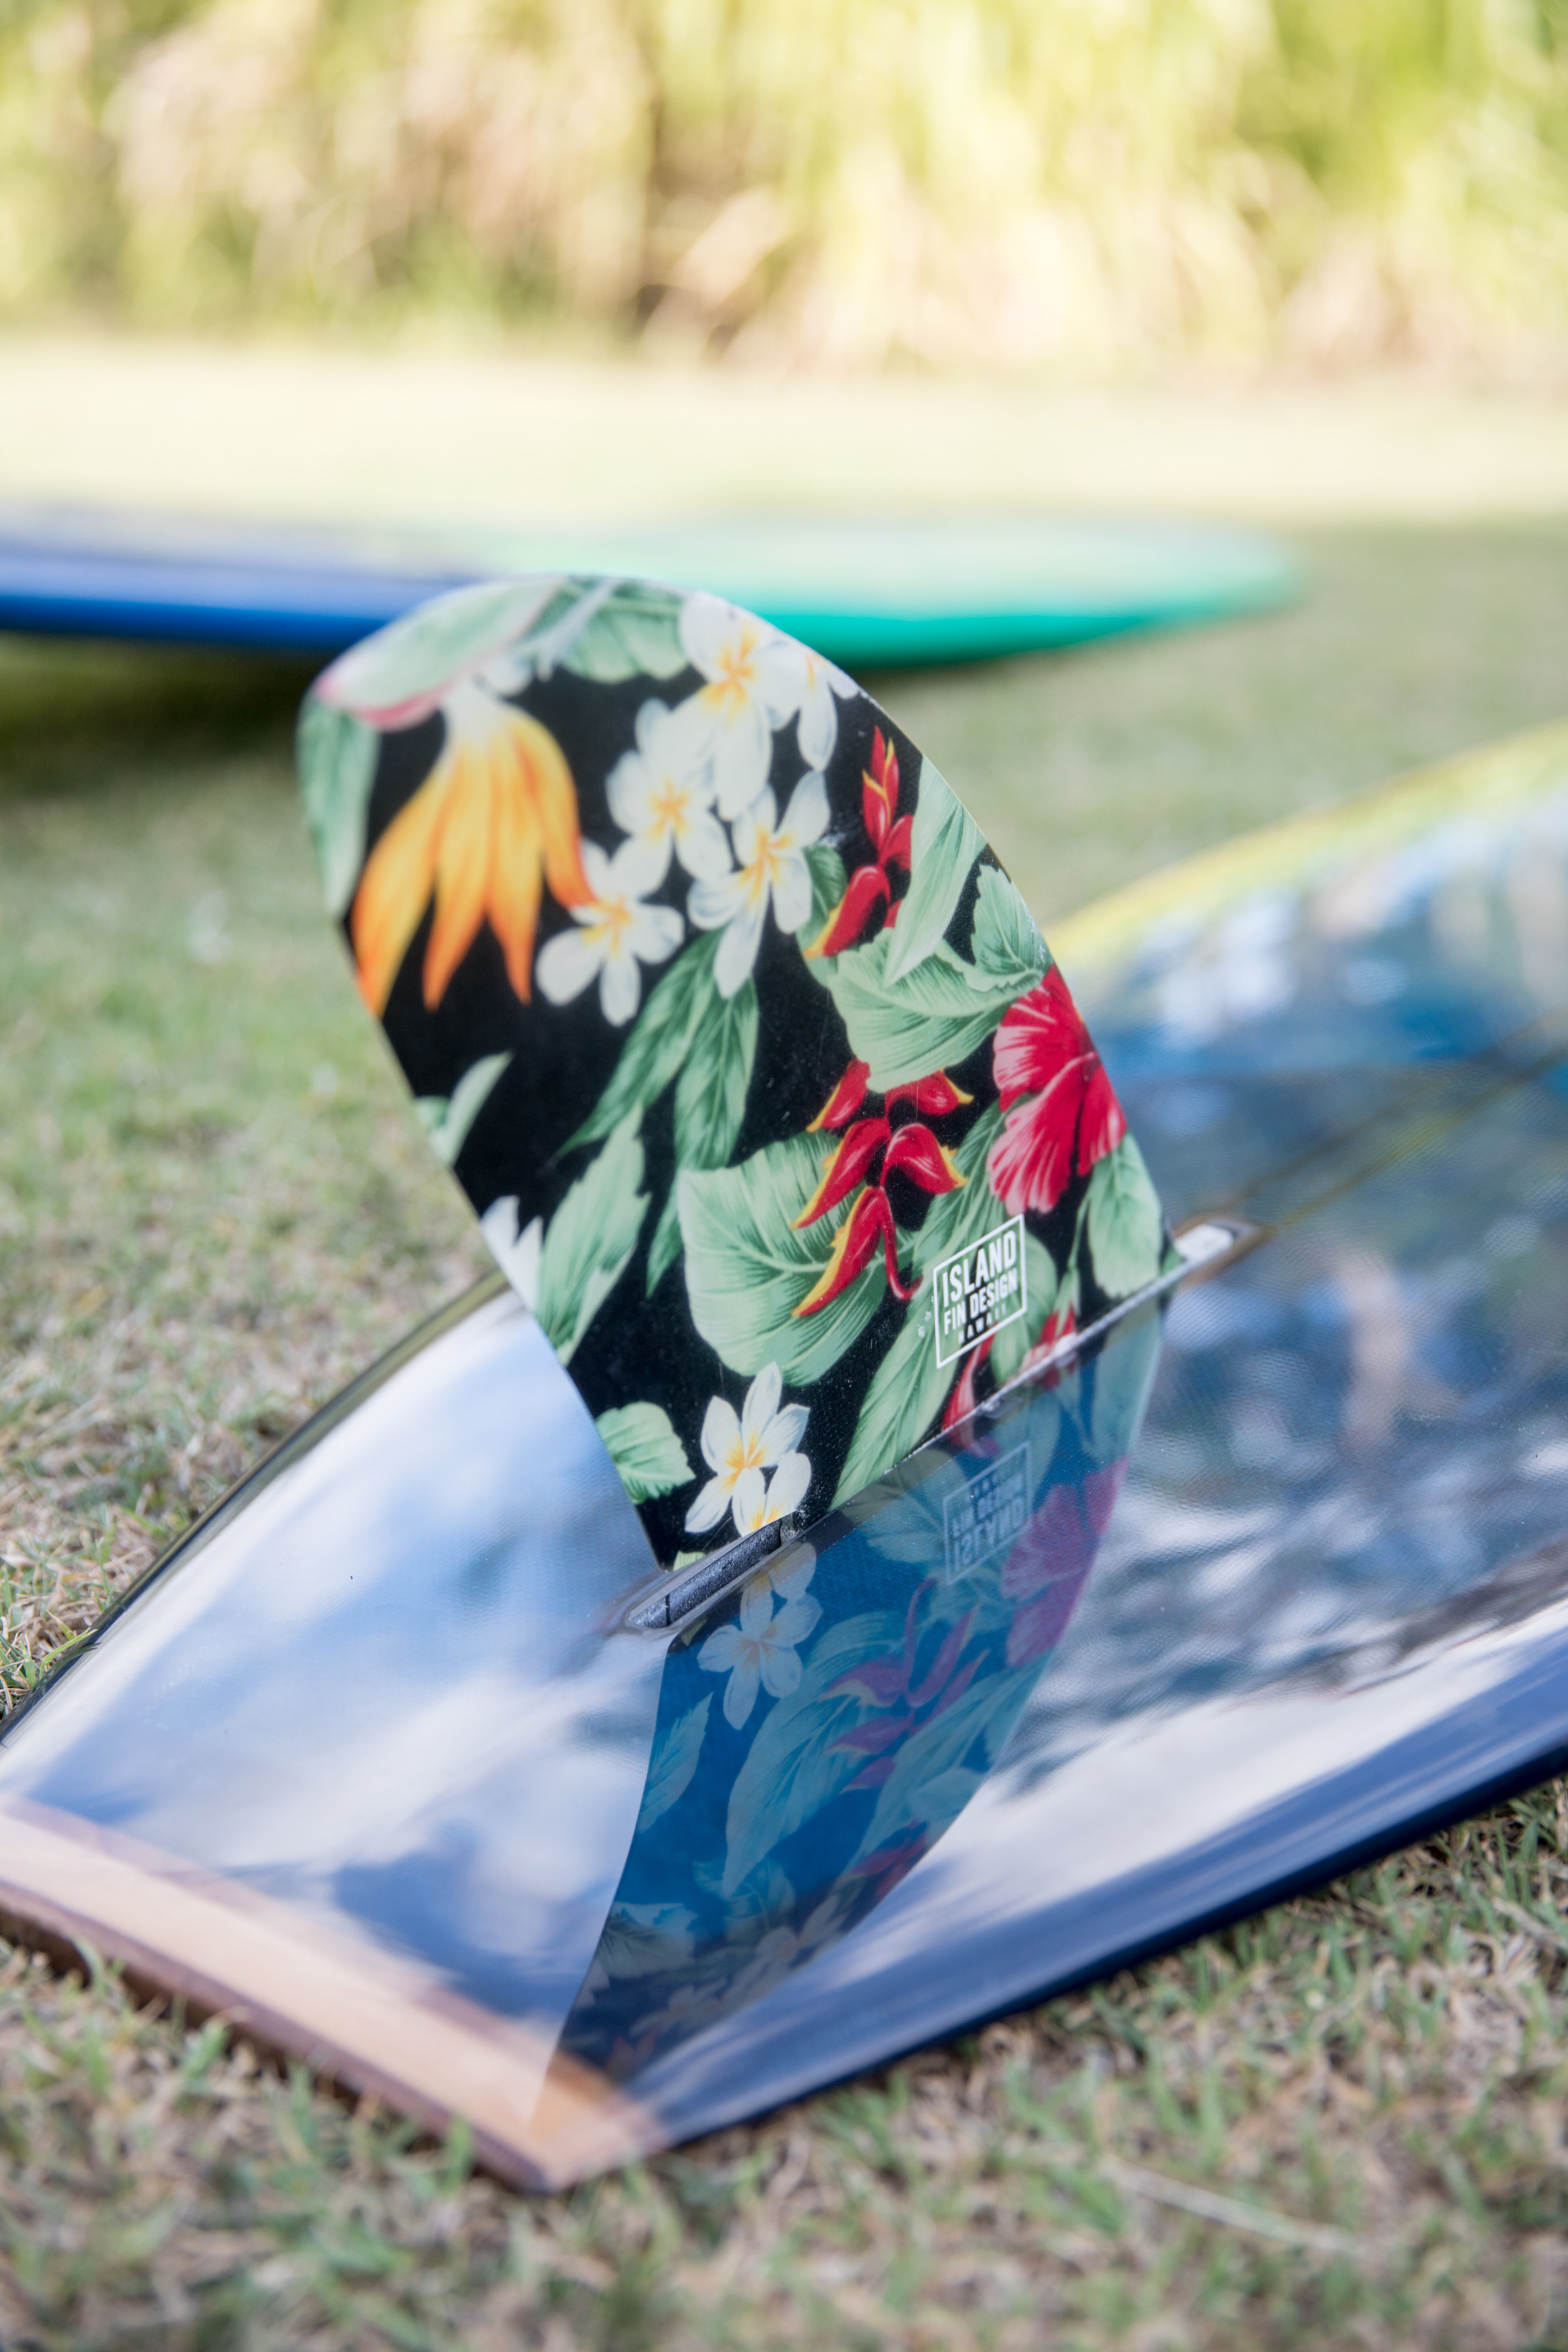 bryce johnson-photography-ebert surfboards-kauai-41.jpg